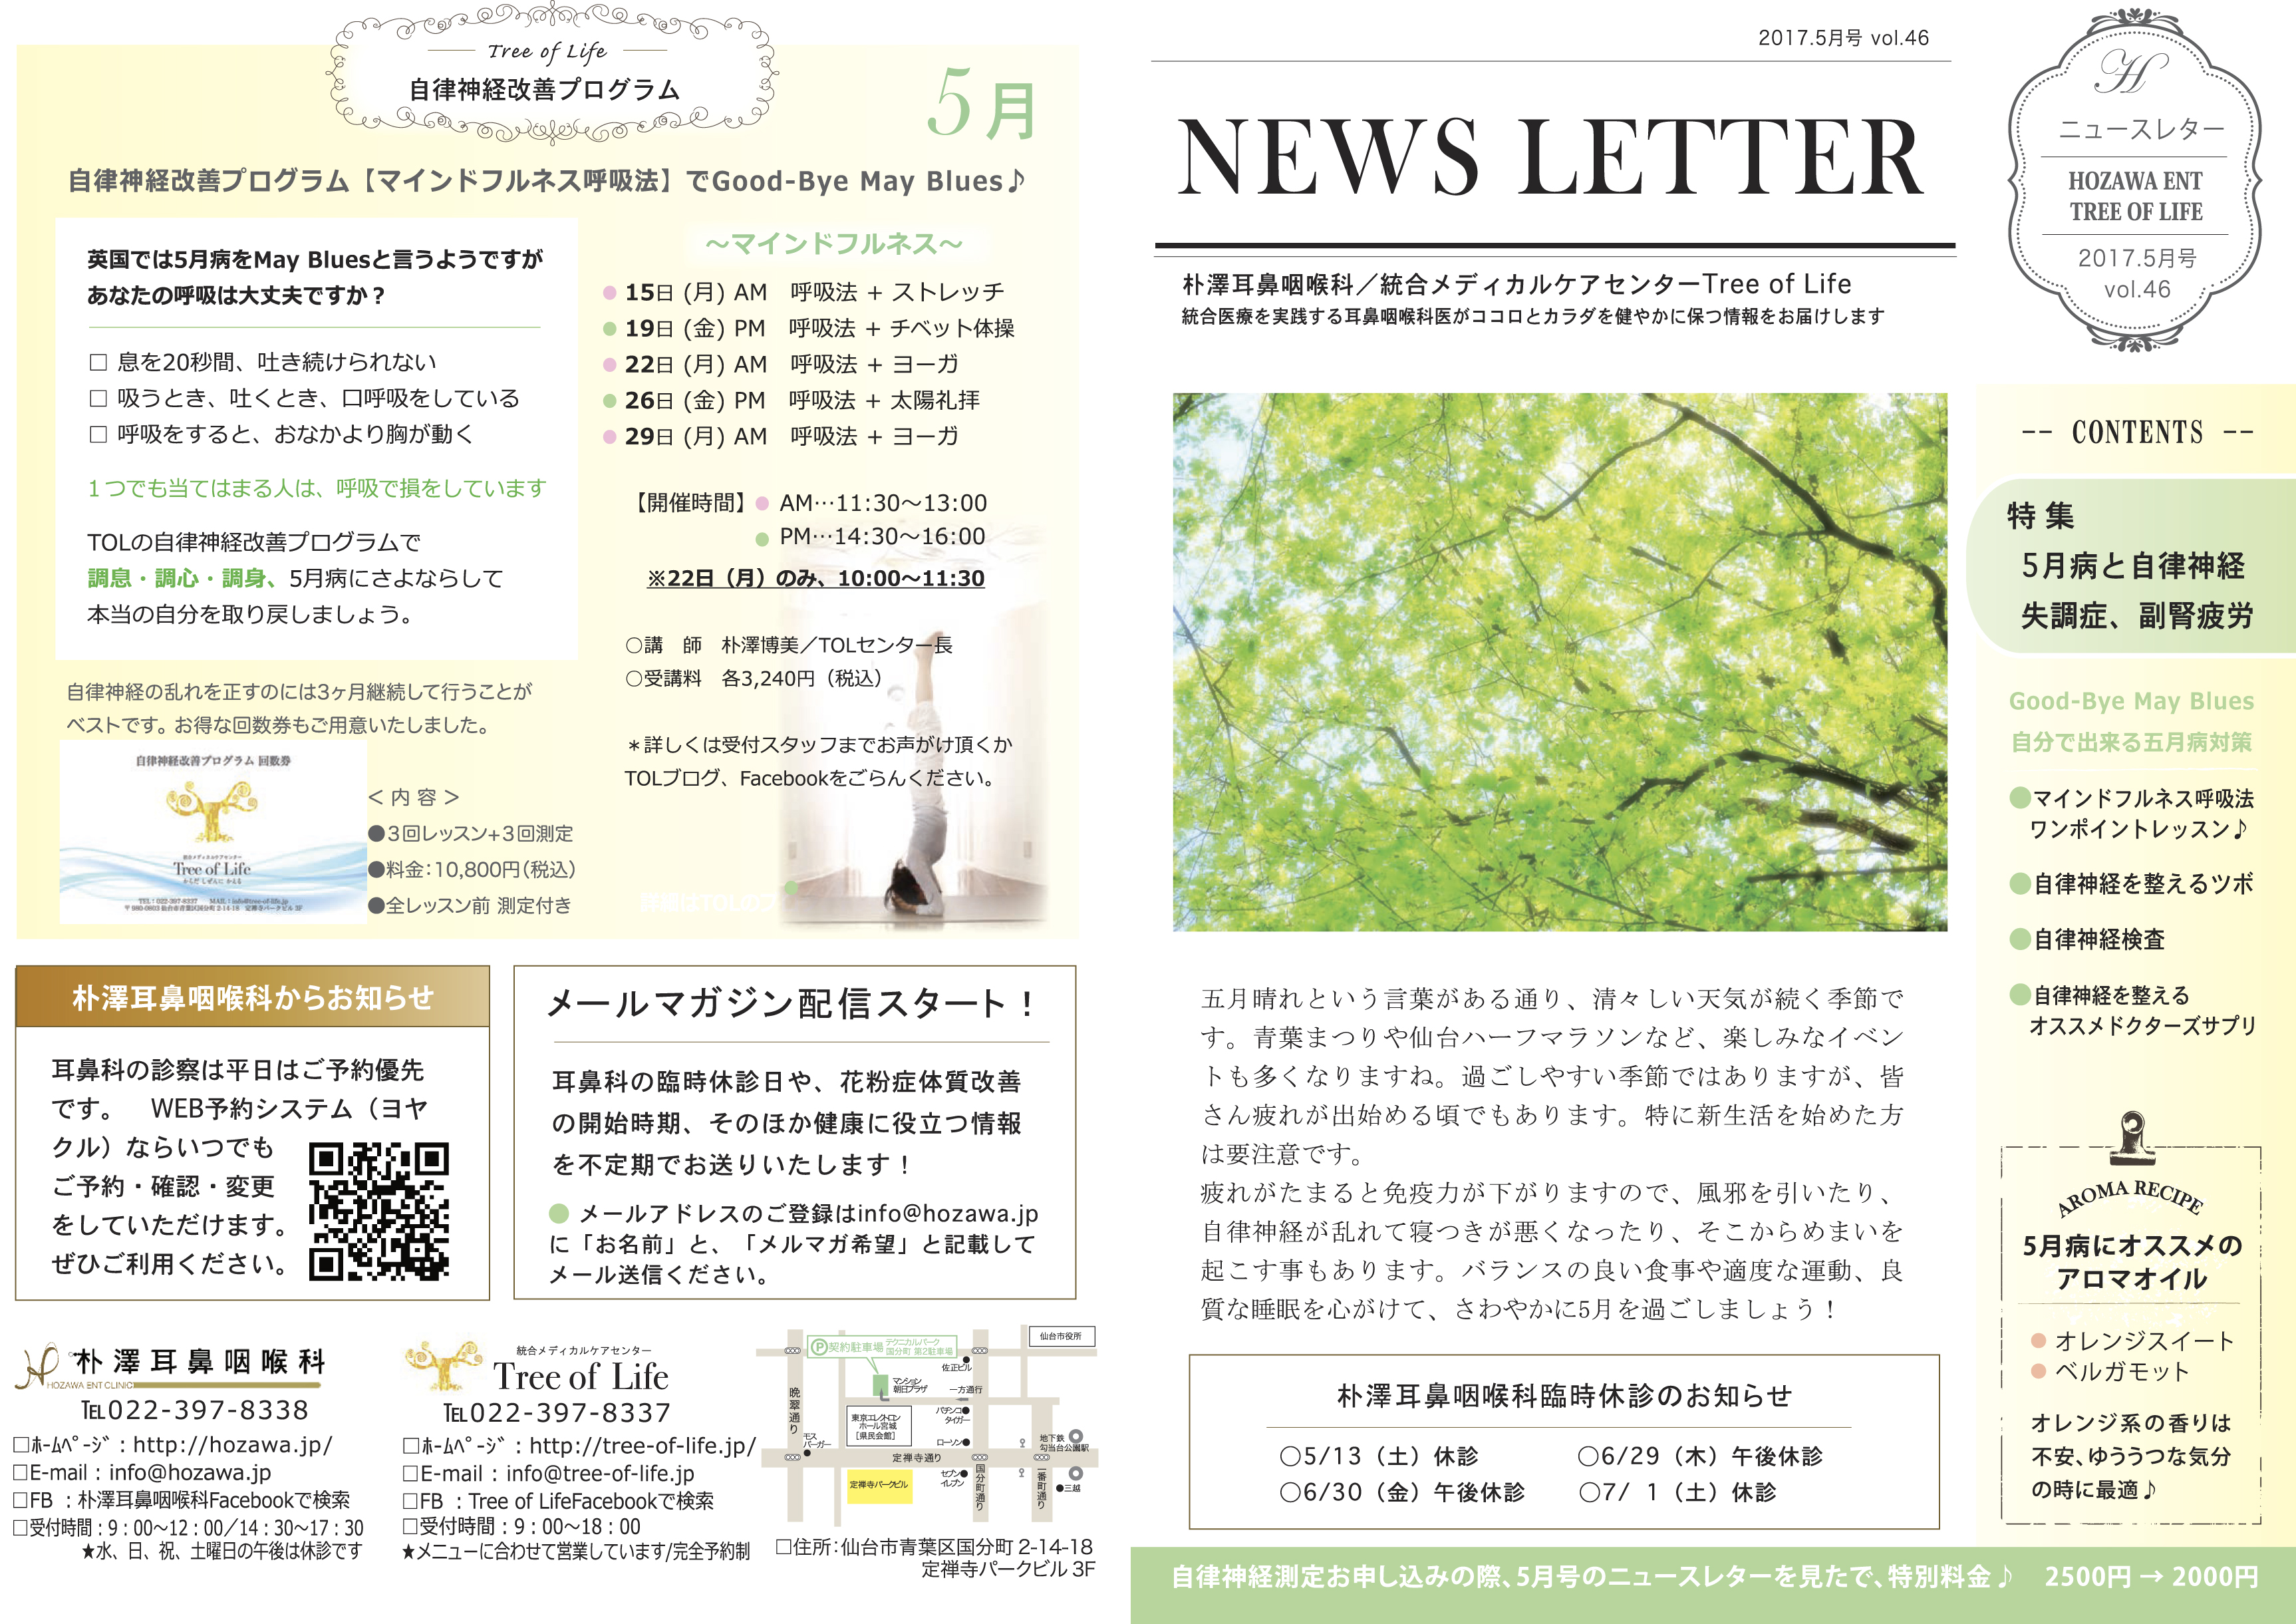 http://hozawa.jp/news/news_img/1704241878_01L-1.jpg